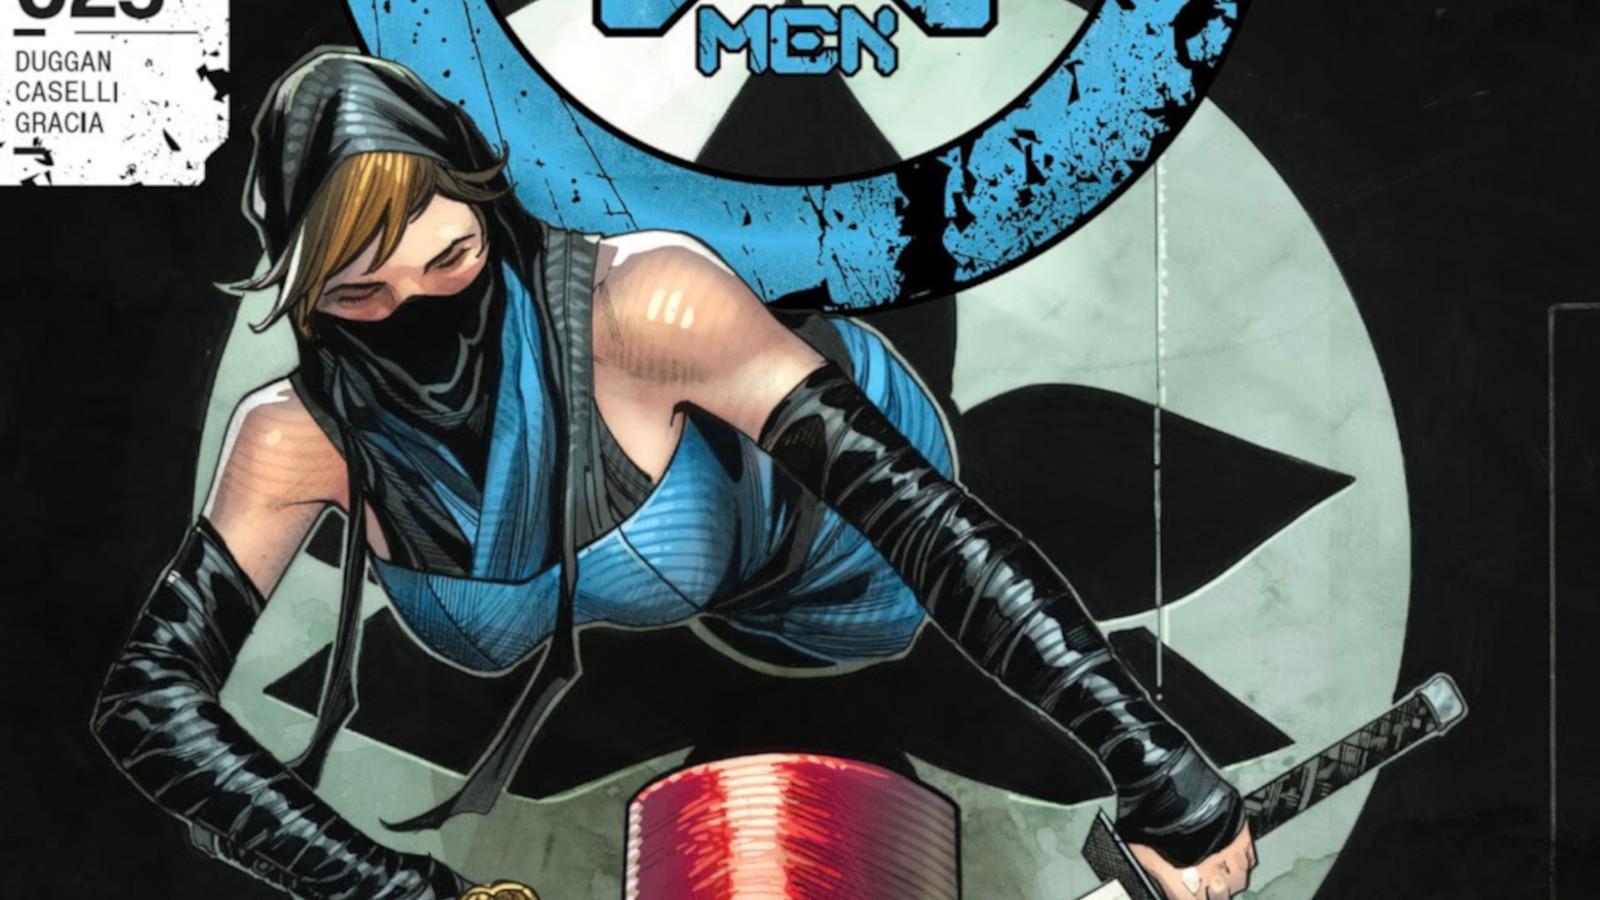 X-Men #25 cover art depicting Kitty Pryde as Shadowkat.